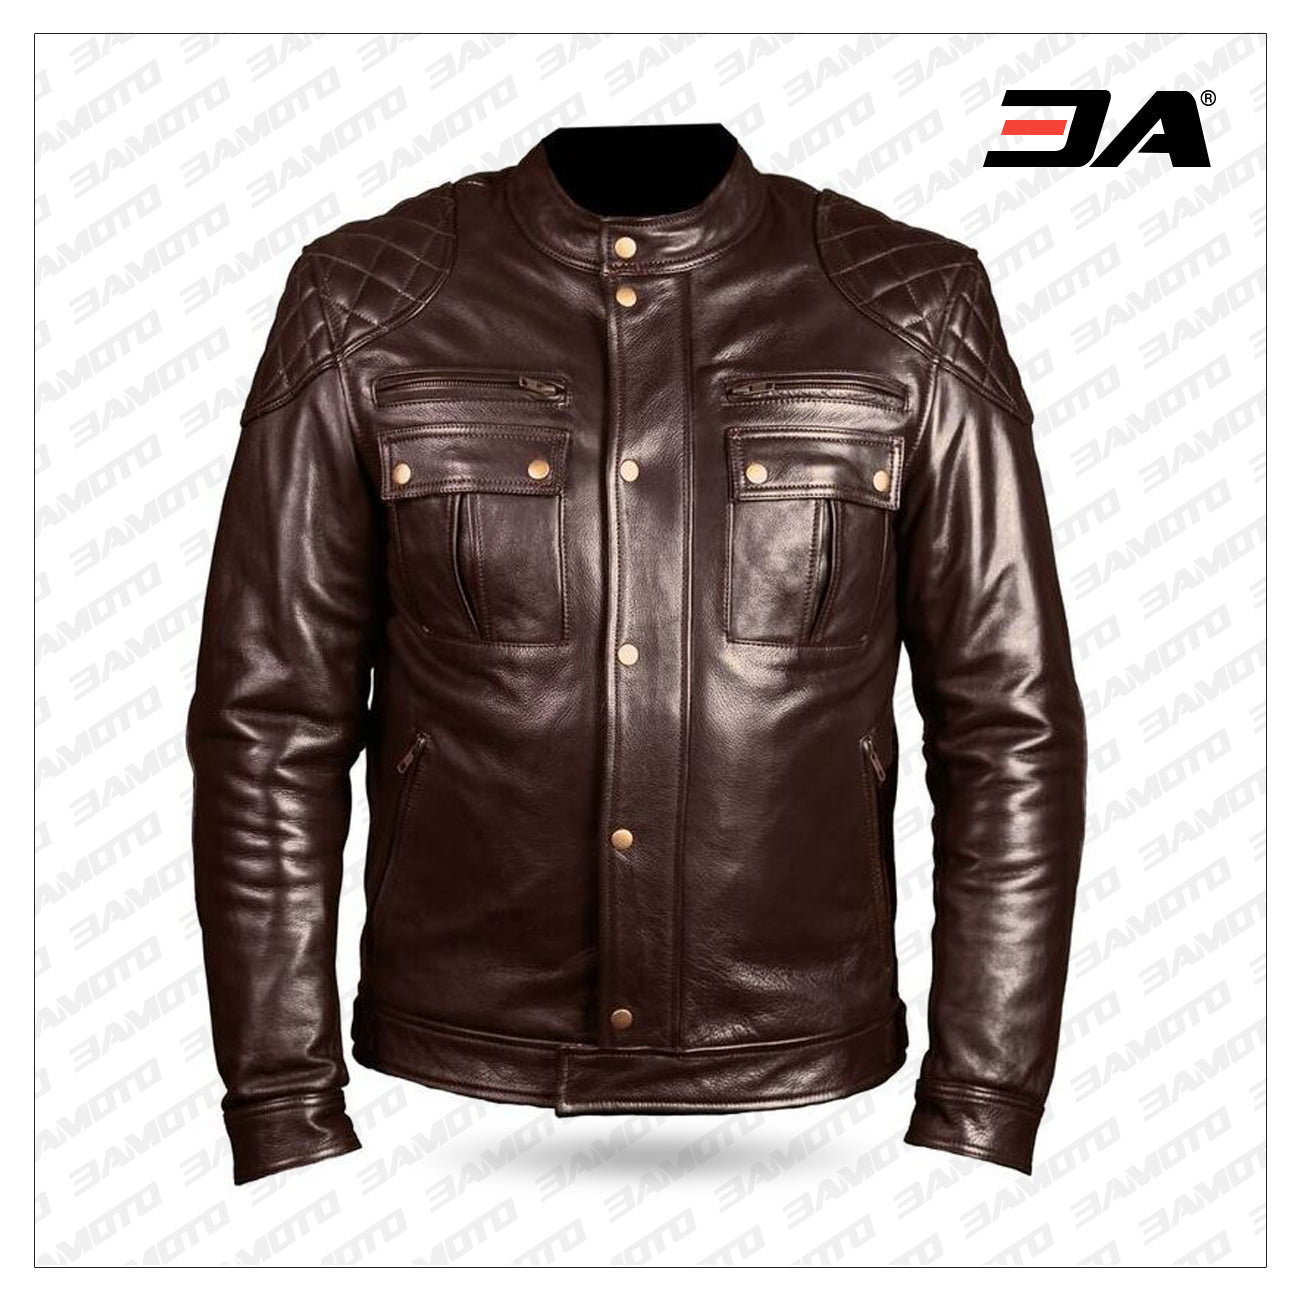 Mirage Motorcycle Leather Jacket Brown